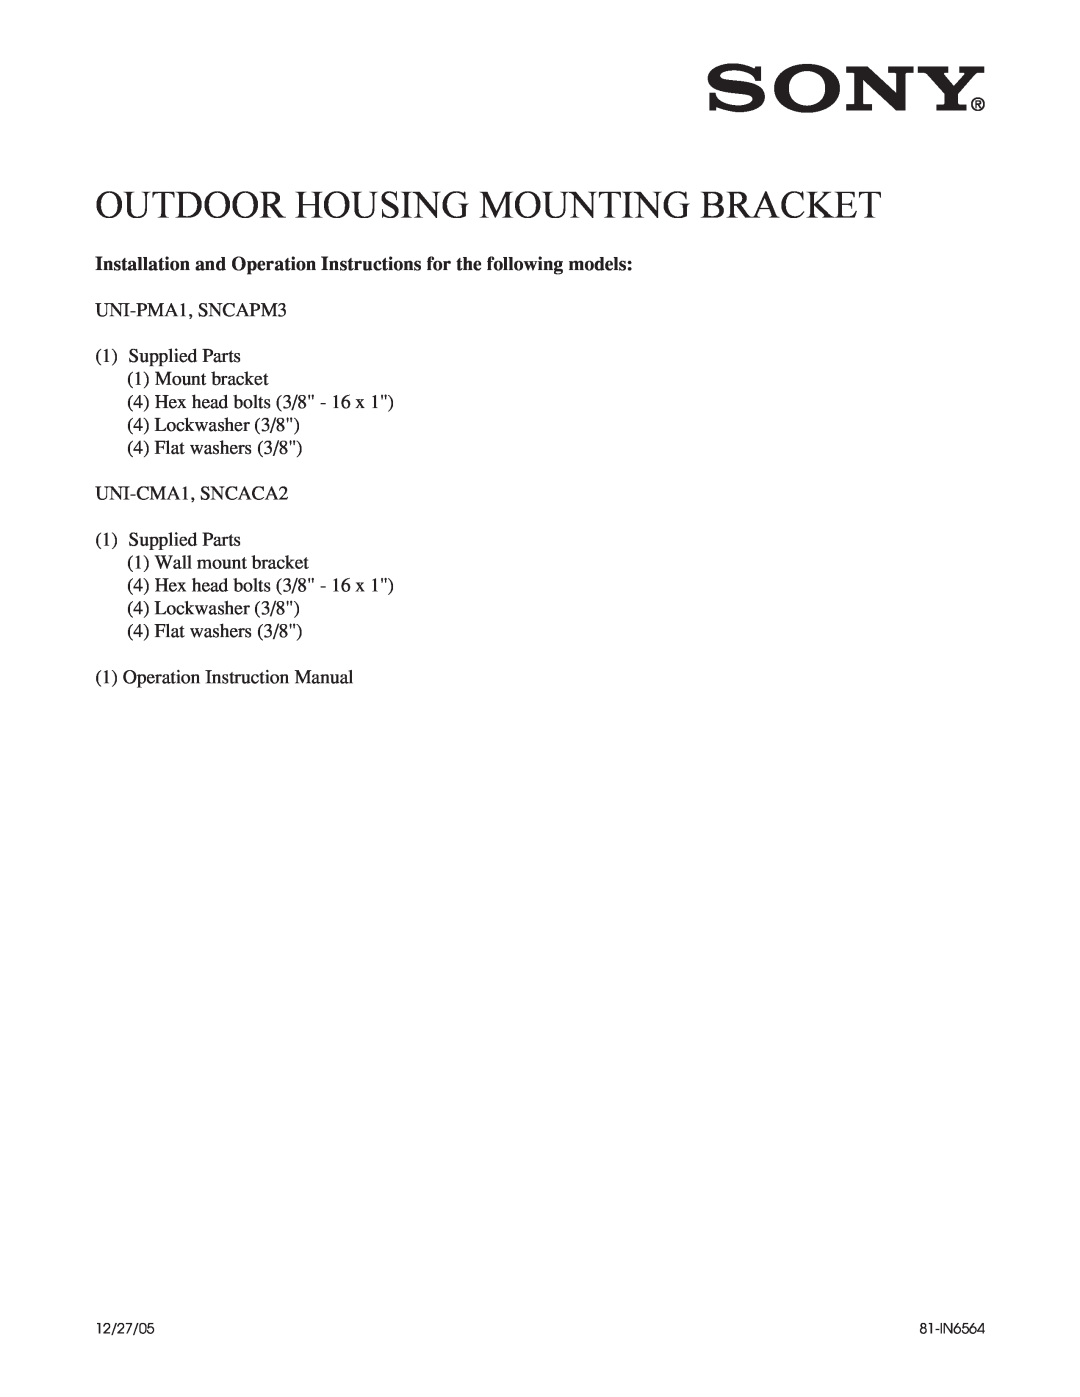 Sony instruction manual Outdoor Housing Mounting Bracket, UNI-PMA1, SNCAPM3 1 Supplied Parts 1 Mount bracket, 12/27/05 